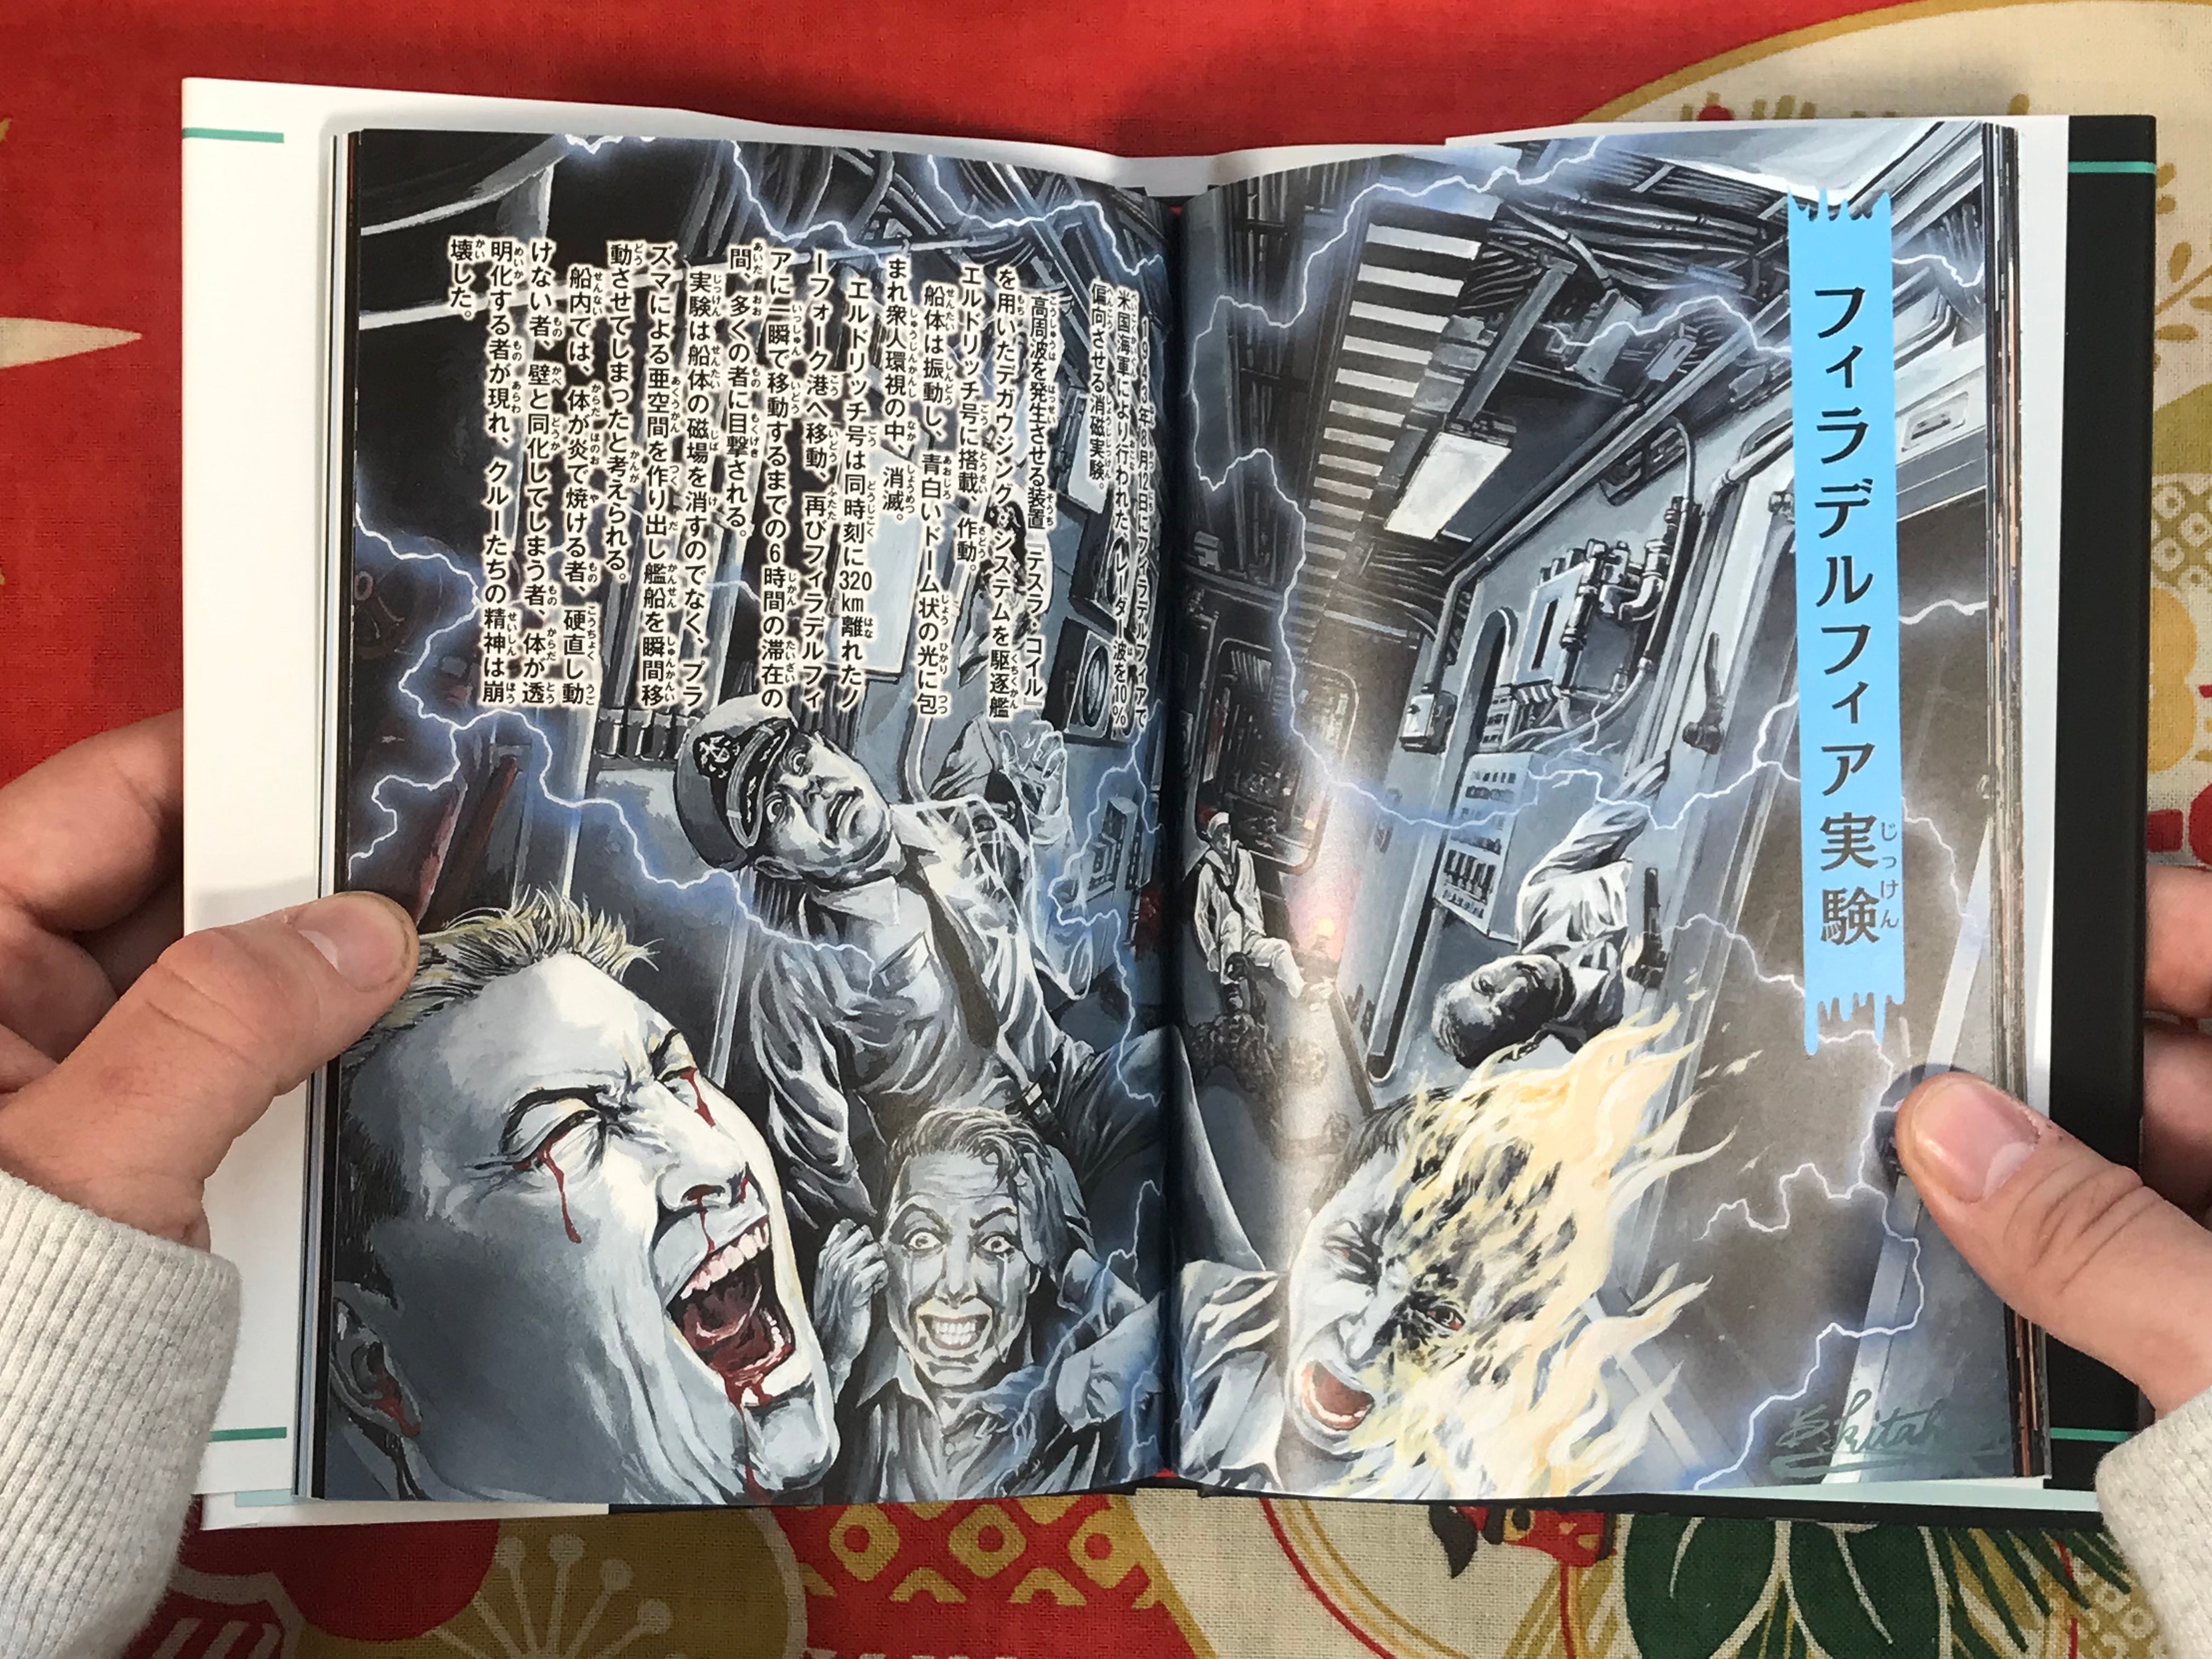 Reiwa Bizarre Pictorial - Mysterious Urban Legend Edition by Kouji Kitahara